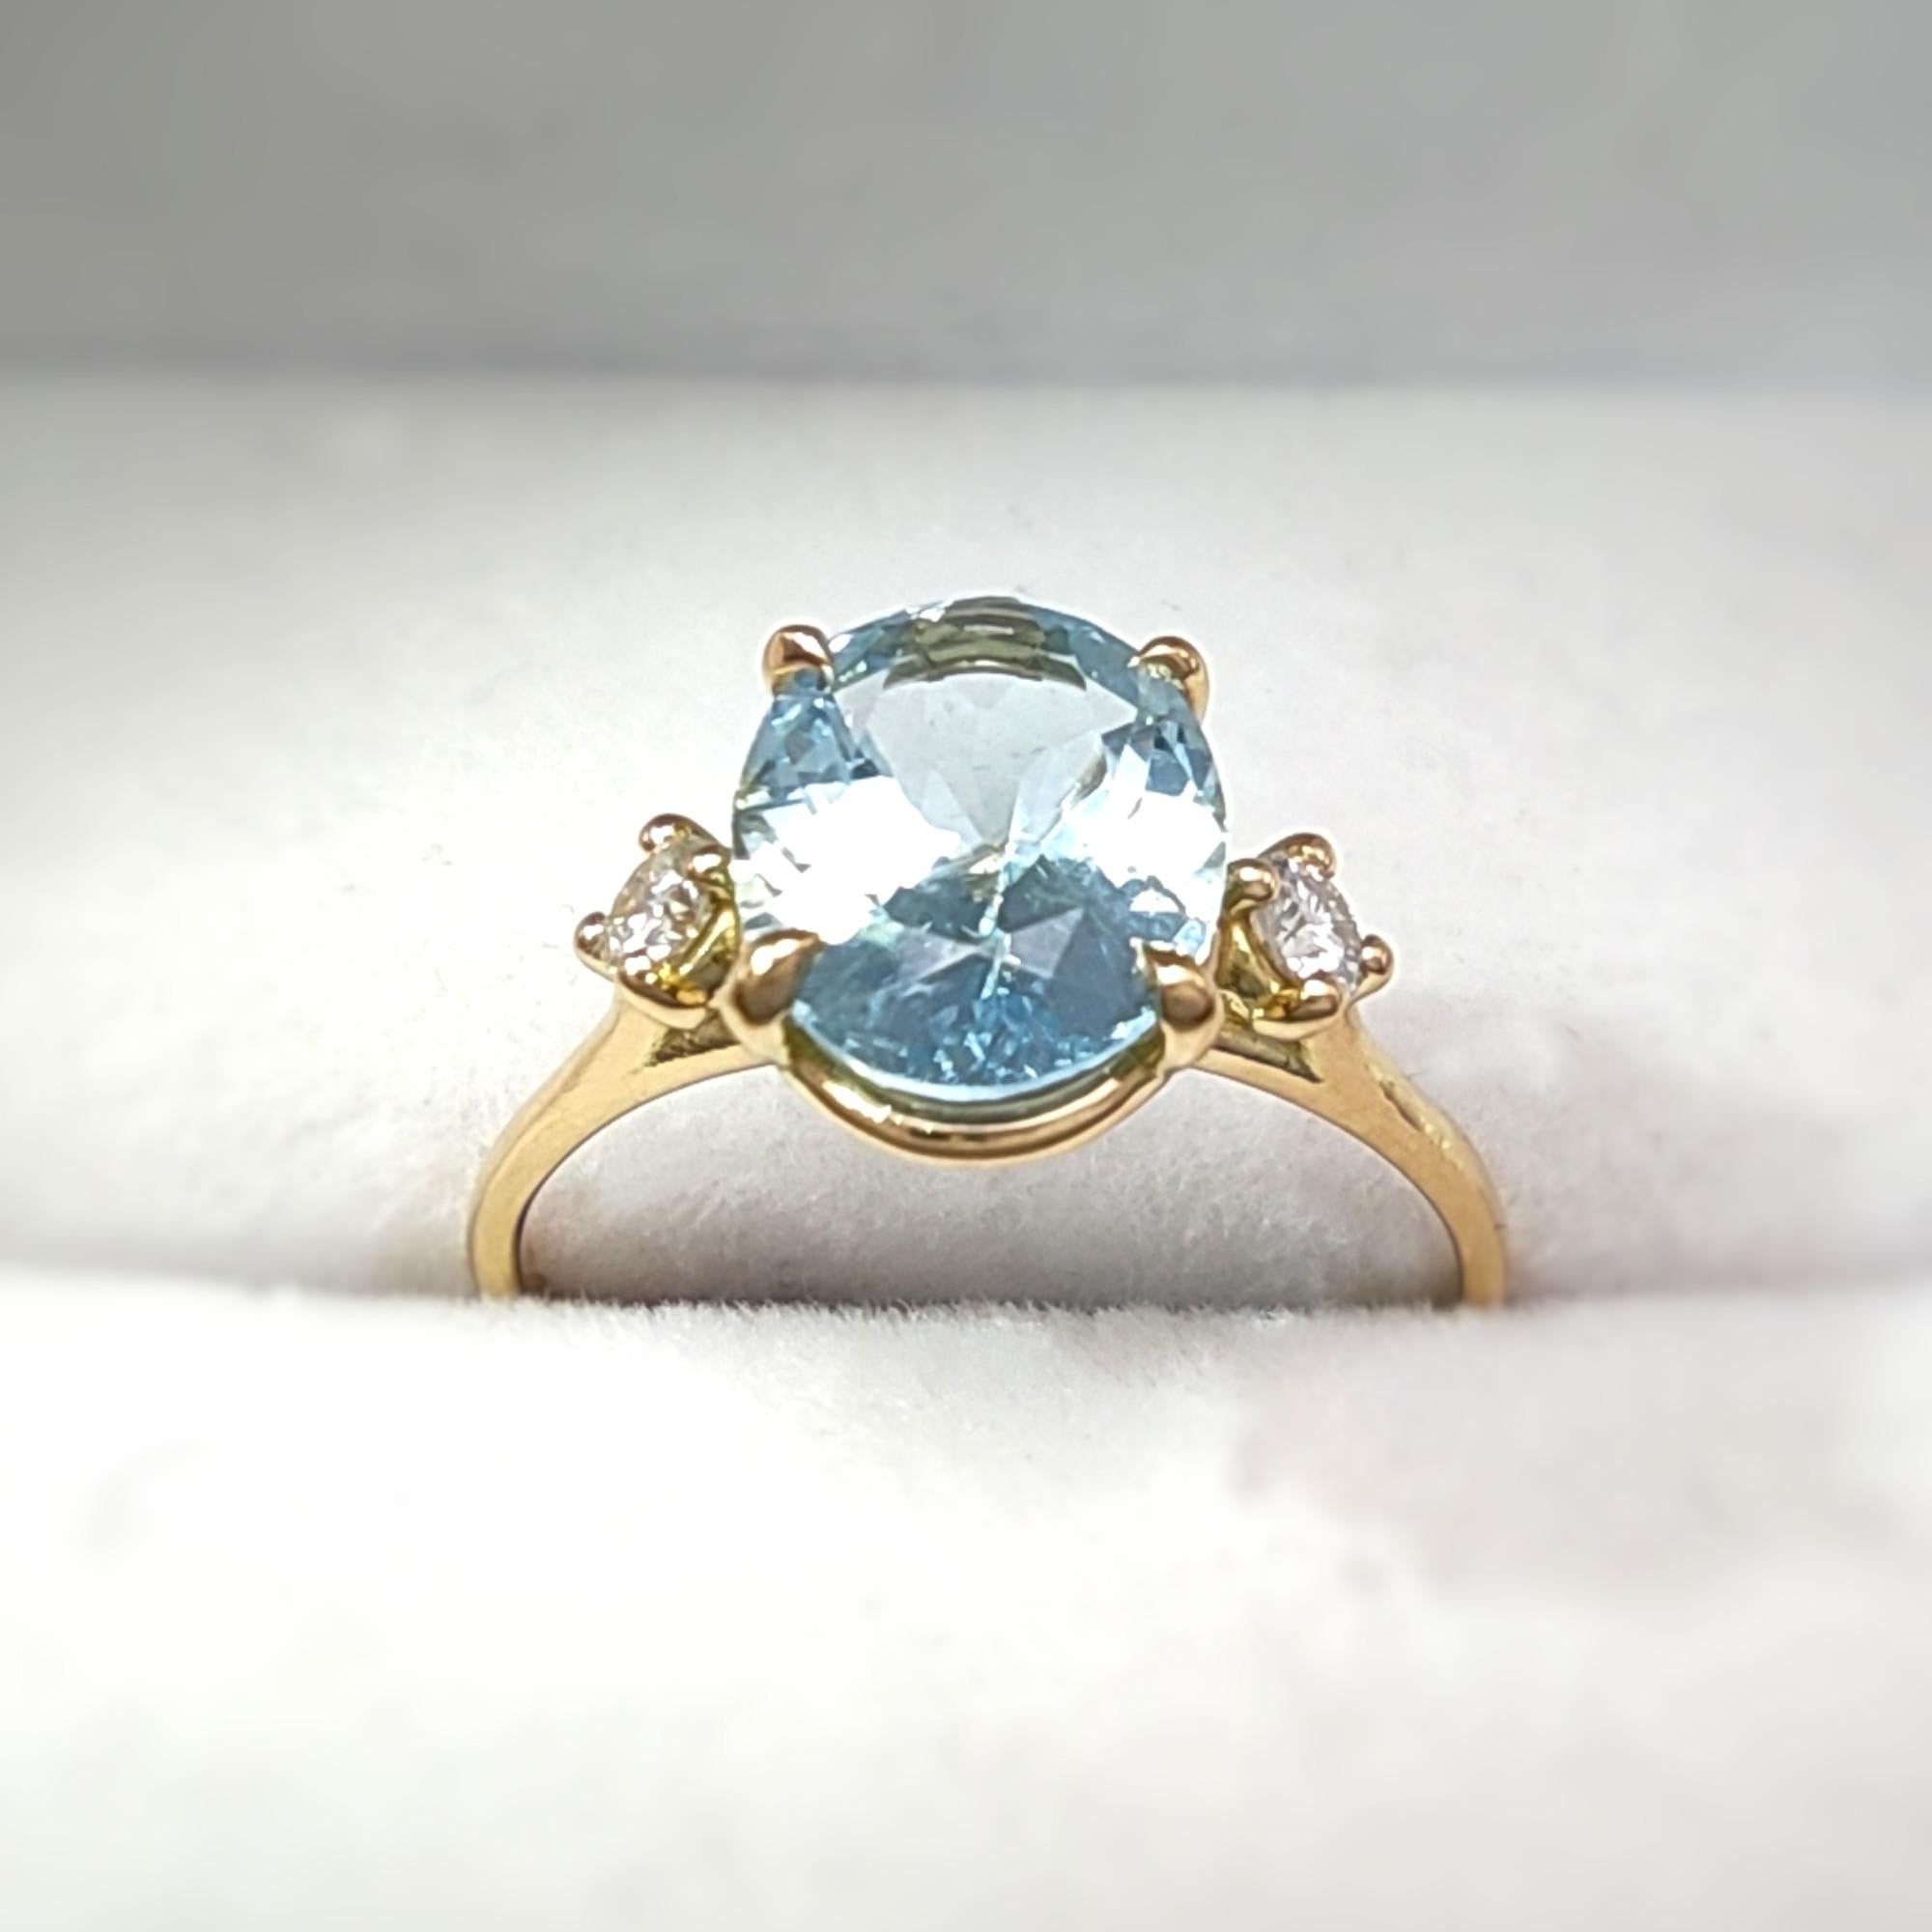 Oval Cut 1.6ct Aquamarine & 0.13ct Diamonds in 18K Gold - Luxury Women's Ring